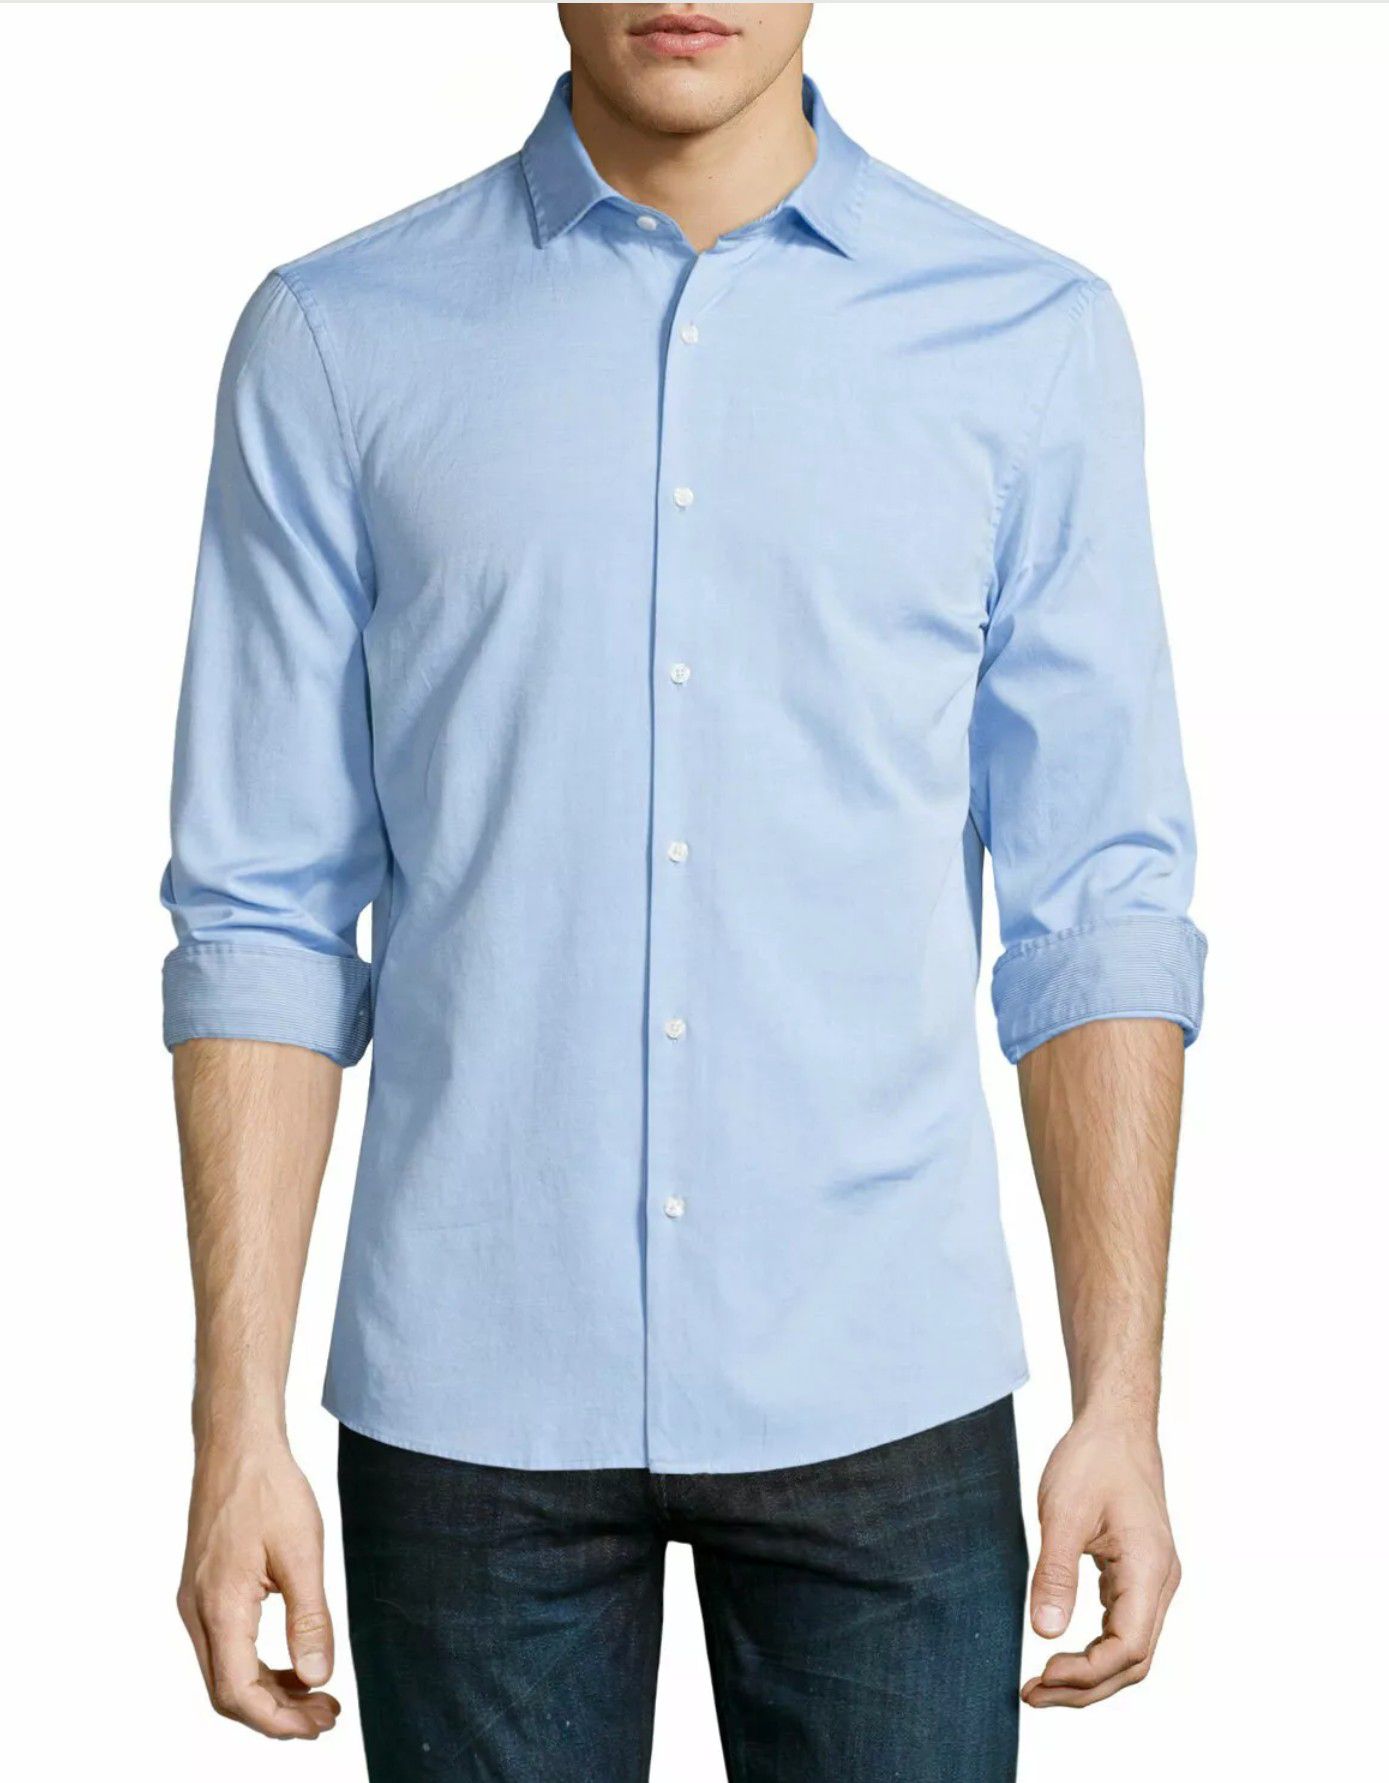 MICHAEL KORS Blue Button Down Dress Shirt Slim Fit SZ: 16.5 32/33 Pre-Owned